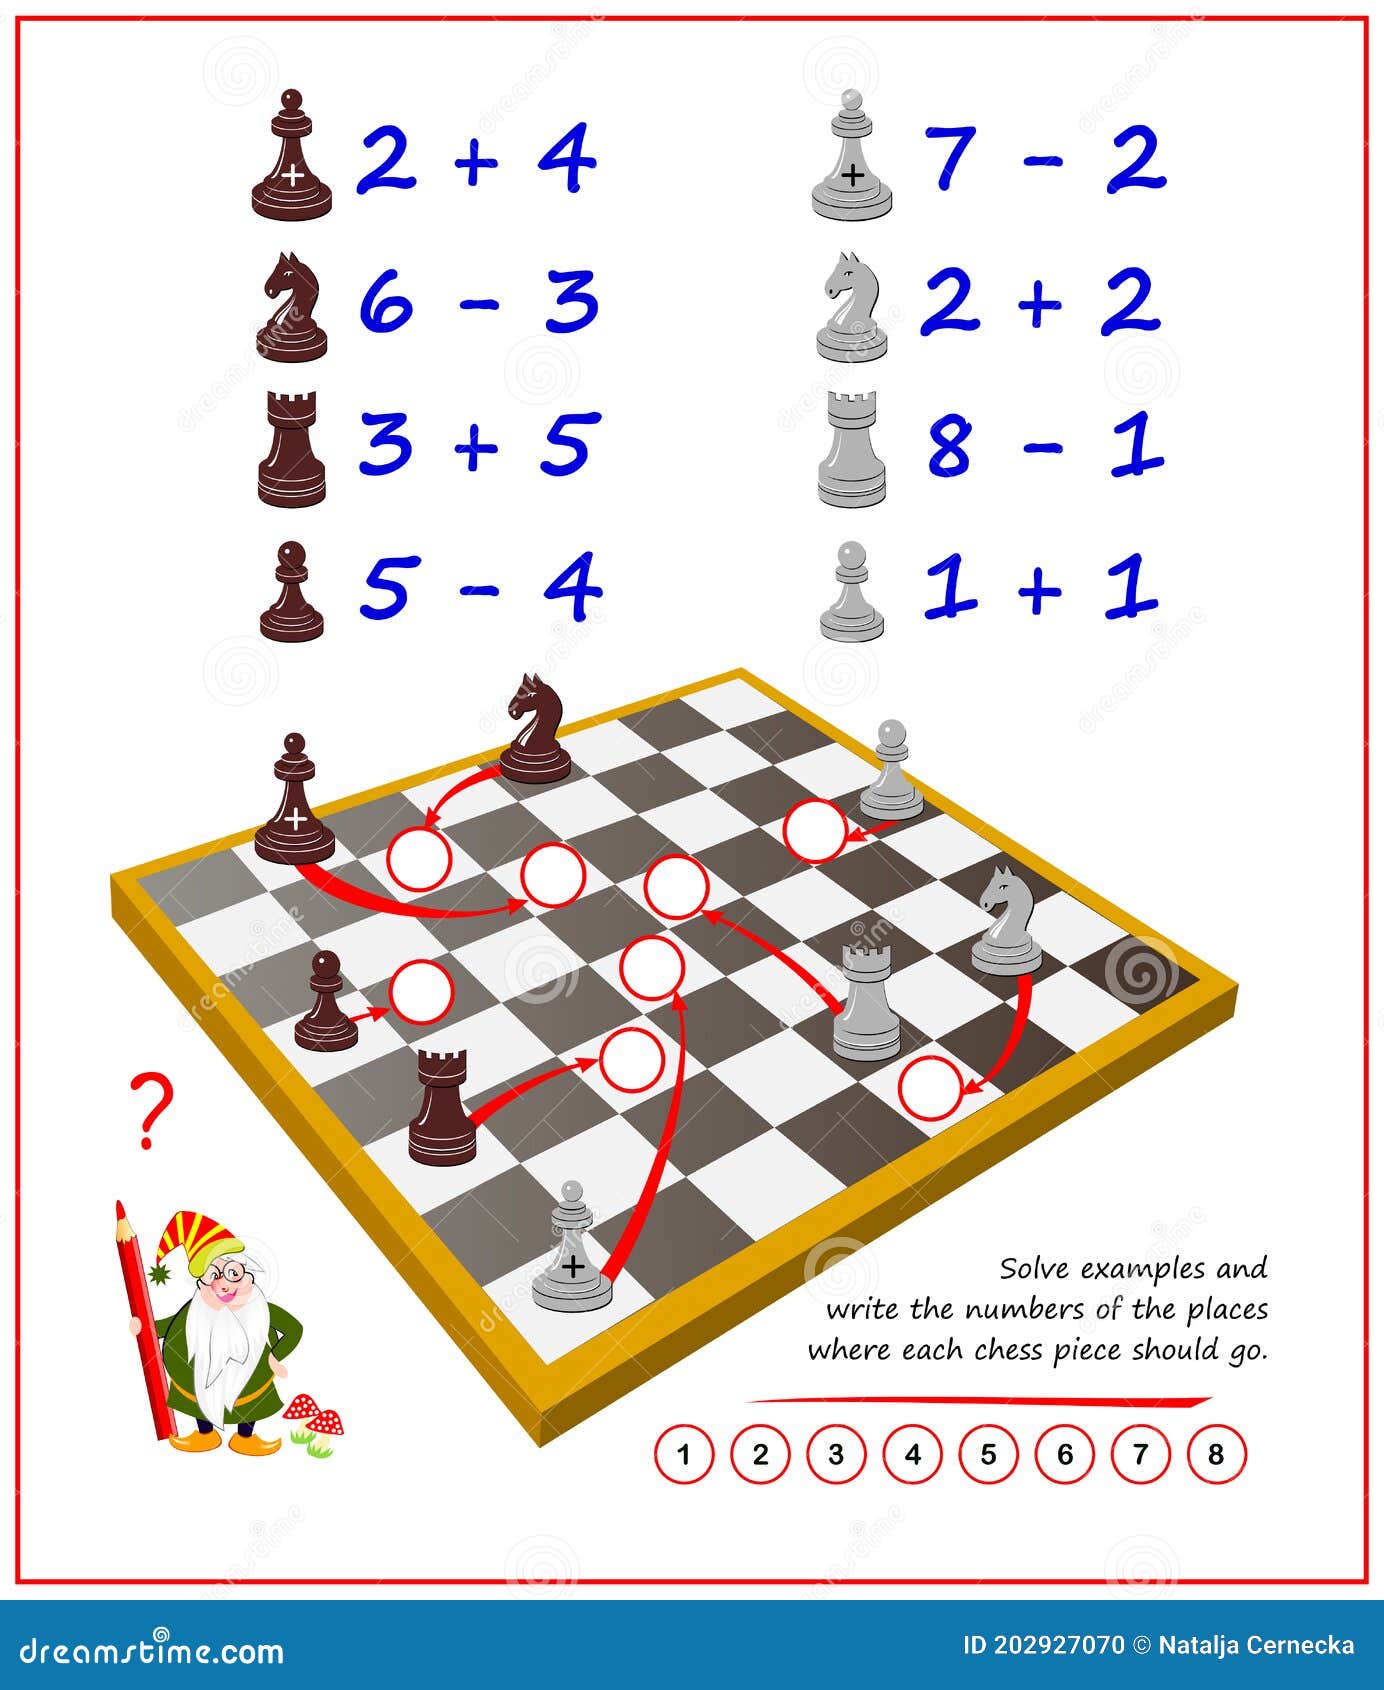 Chess Portfolio Examples